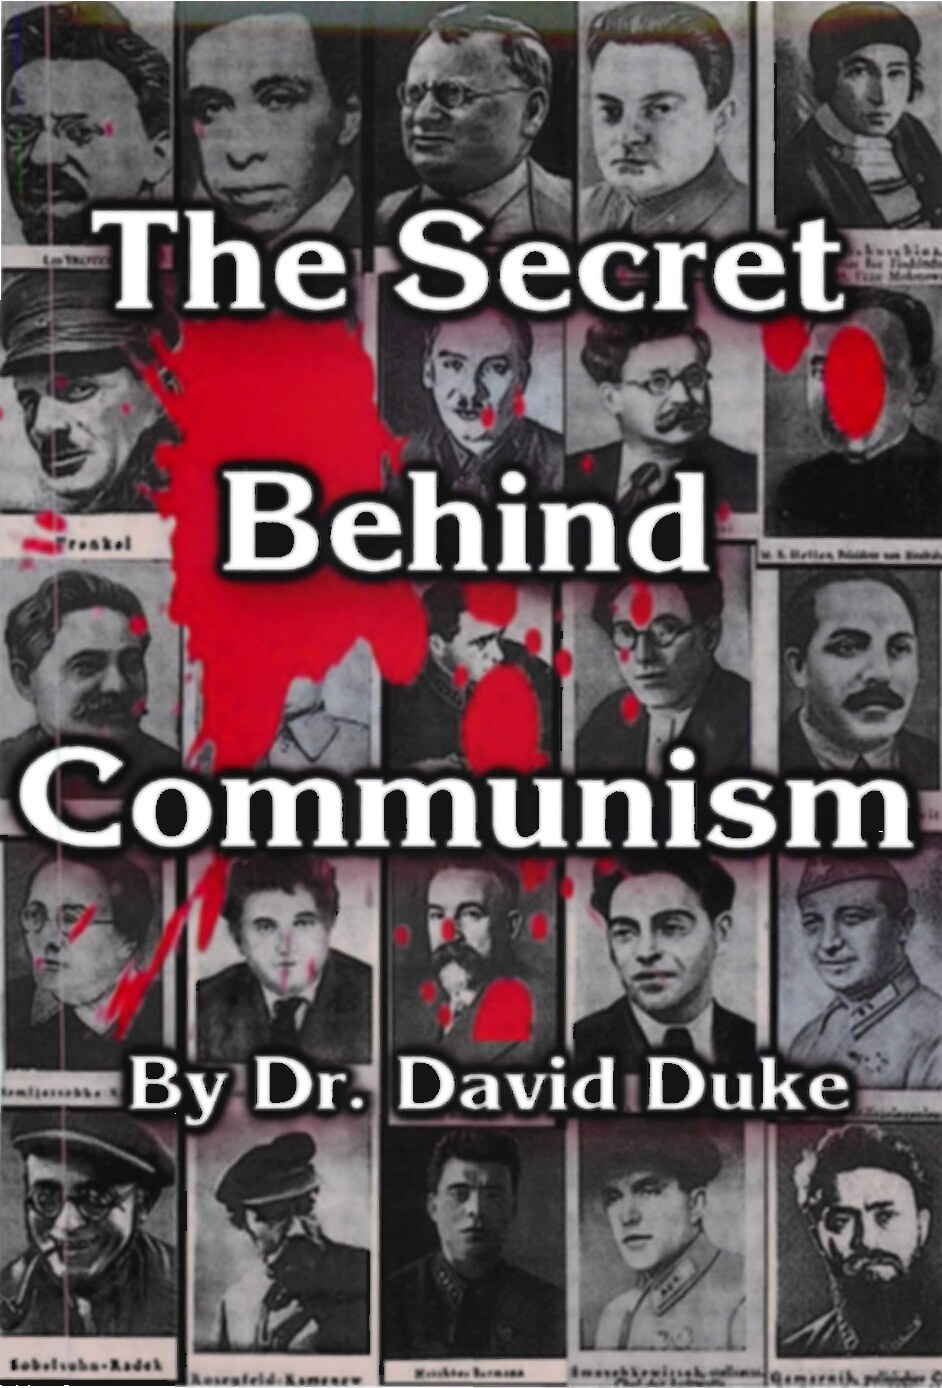 Duke, David; The Secret Behind Communism